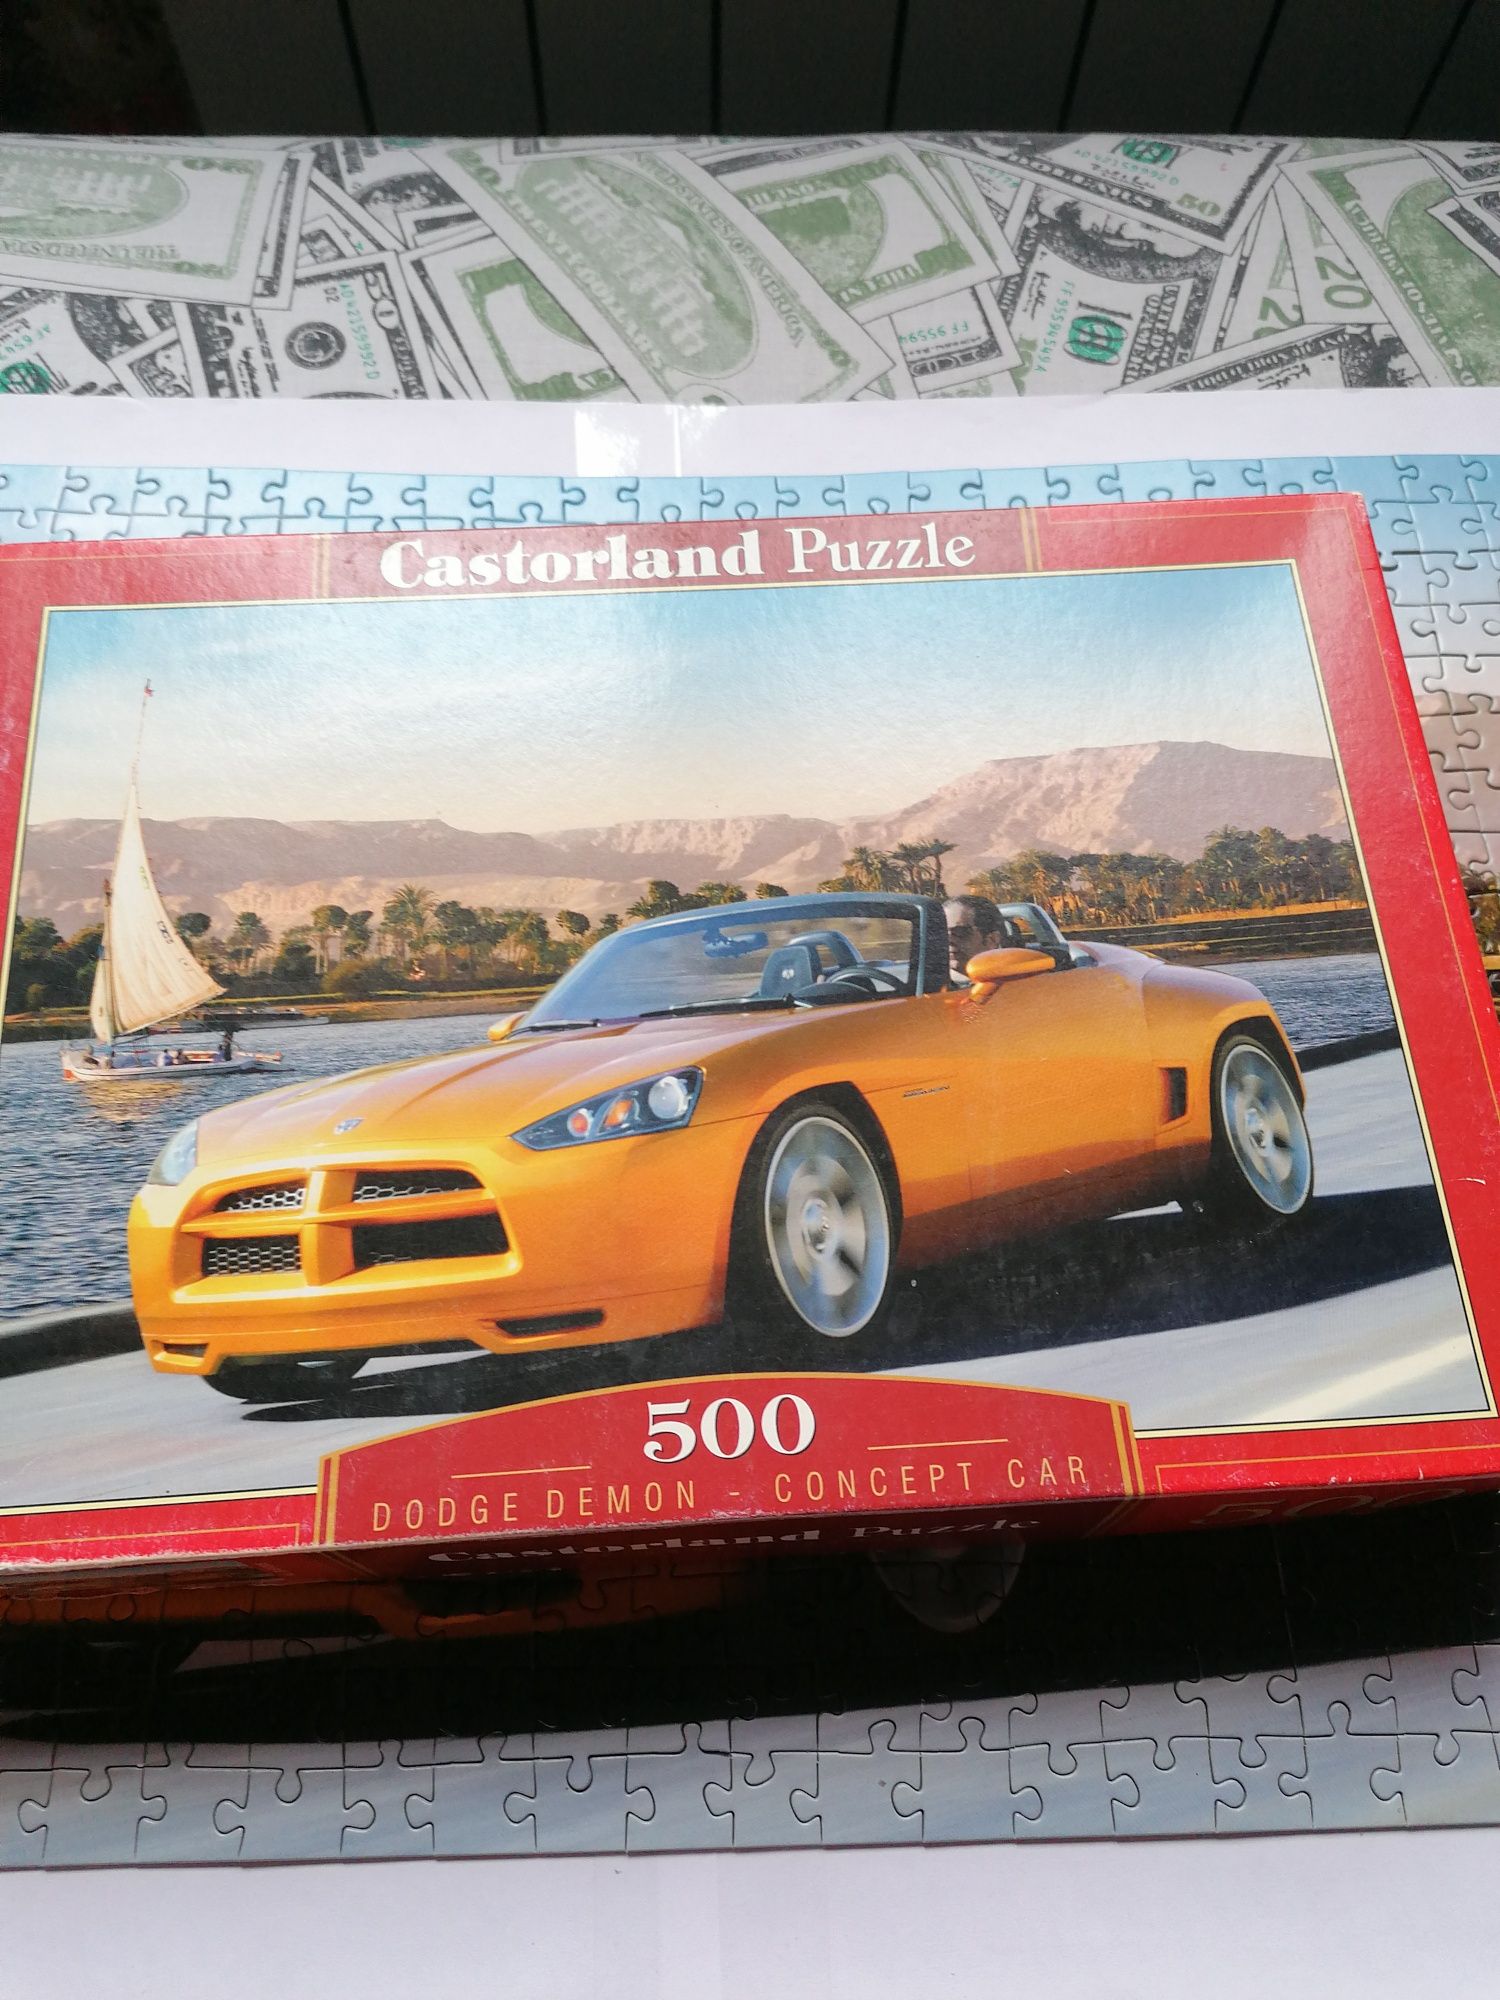 Пазлы касторленд, Castorland puzzle 500 деталей